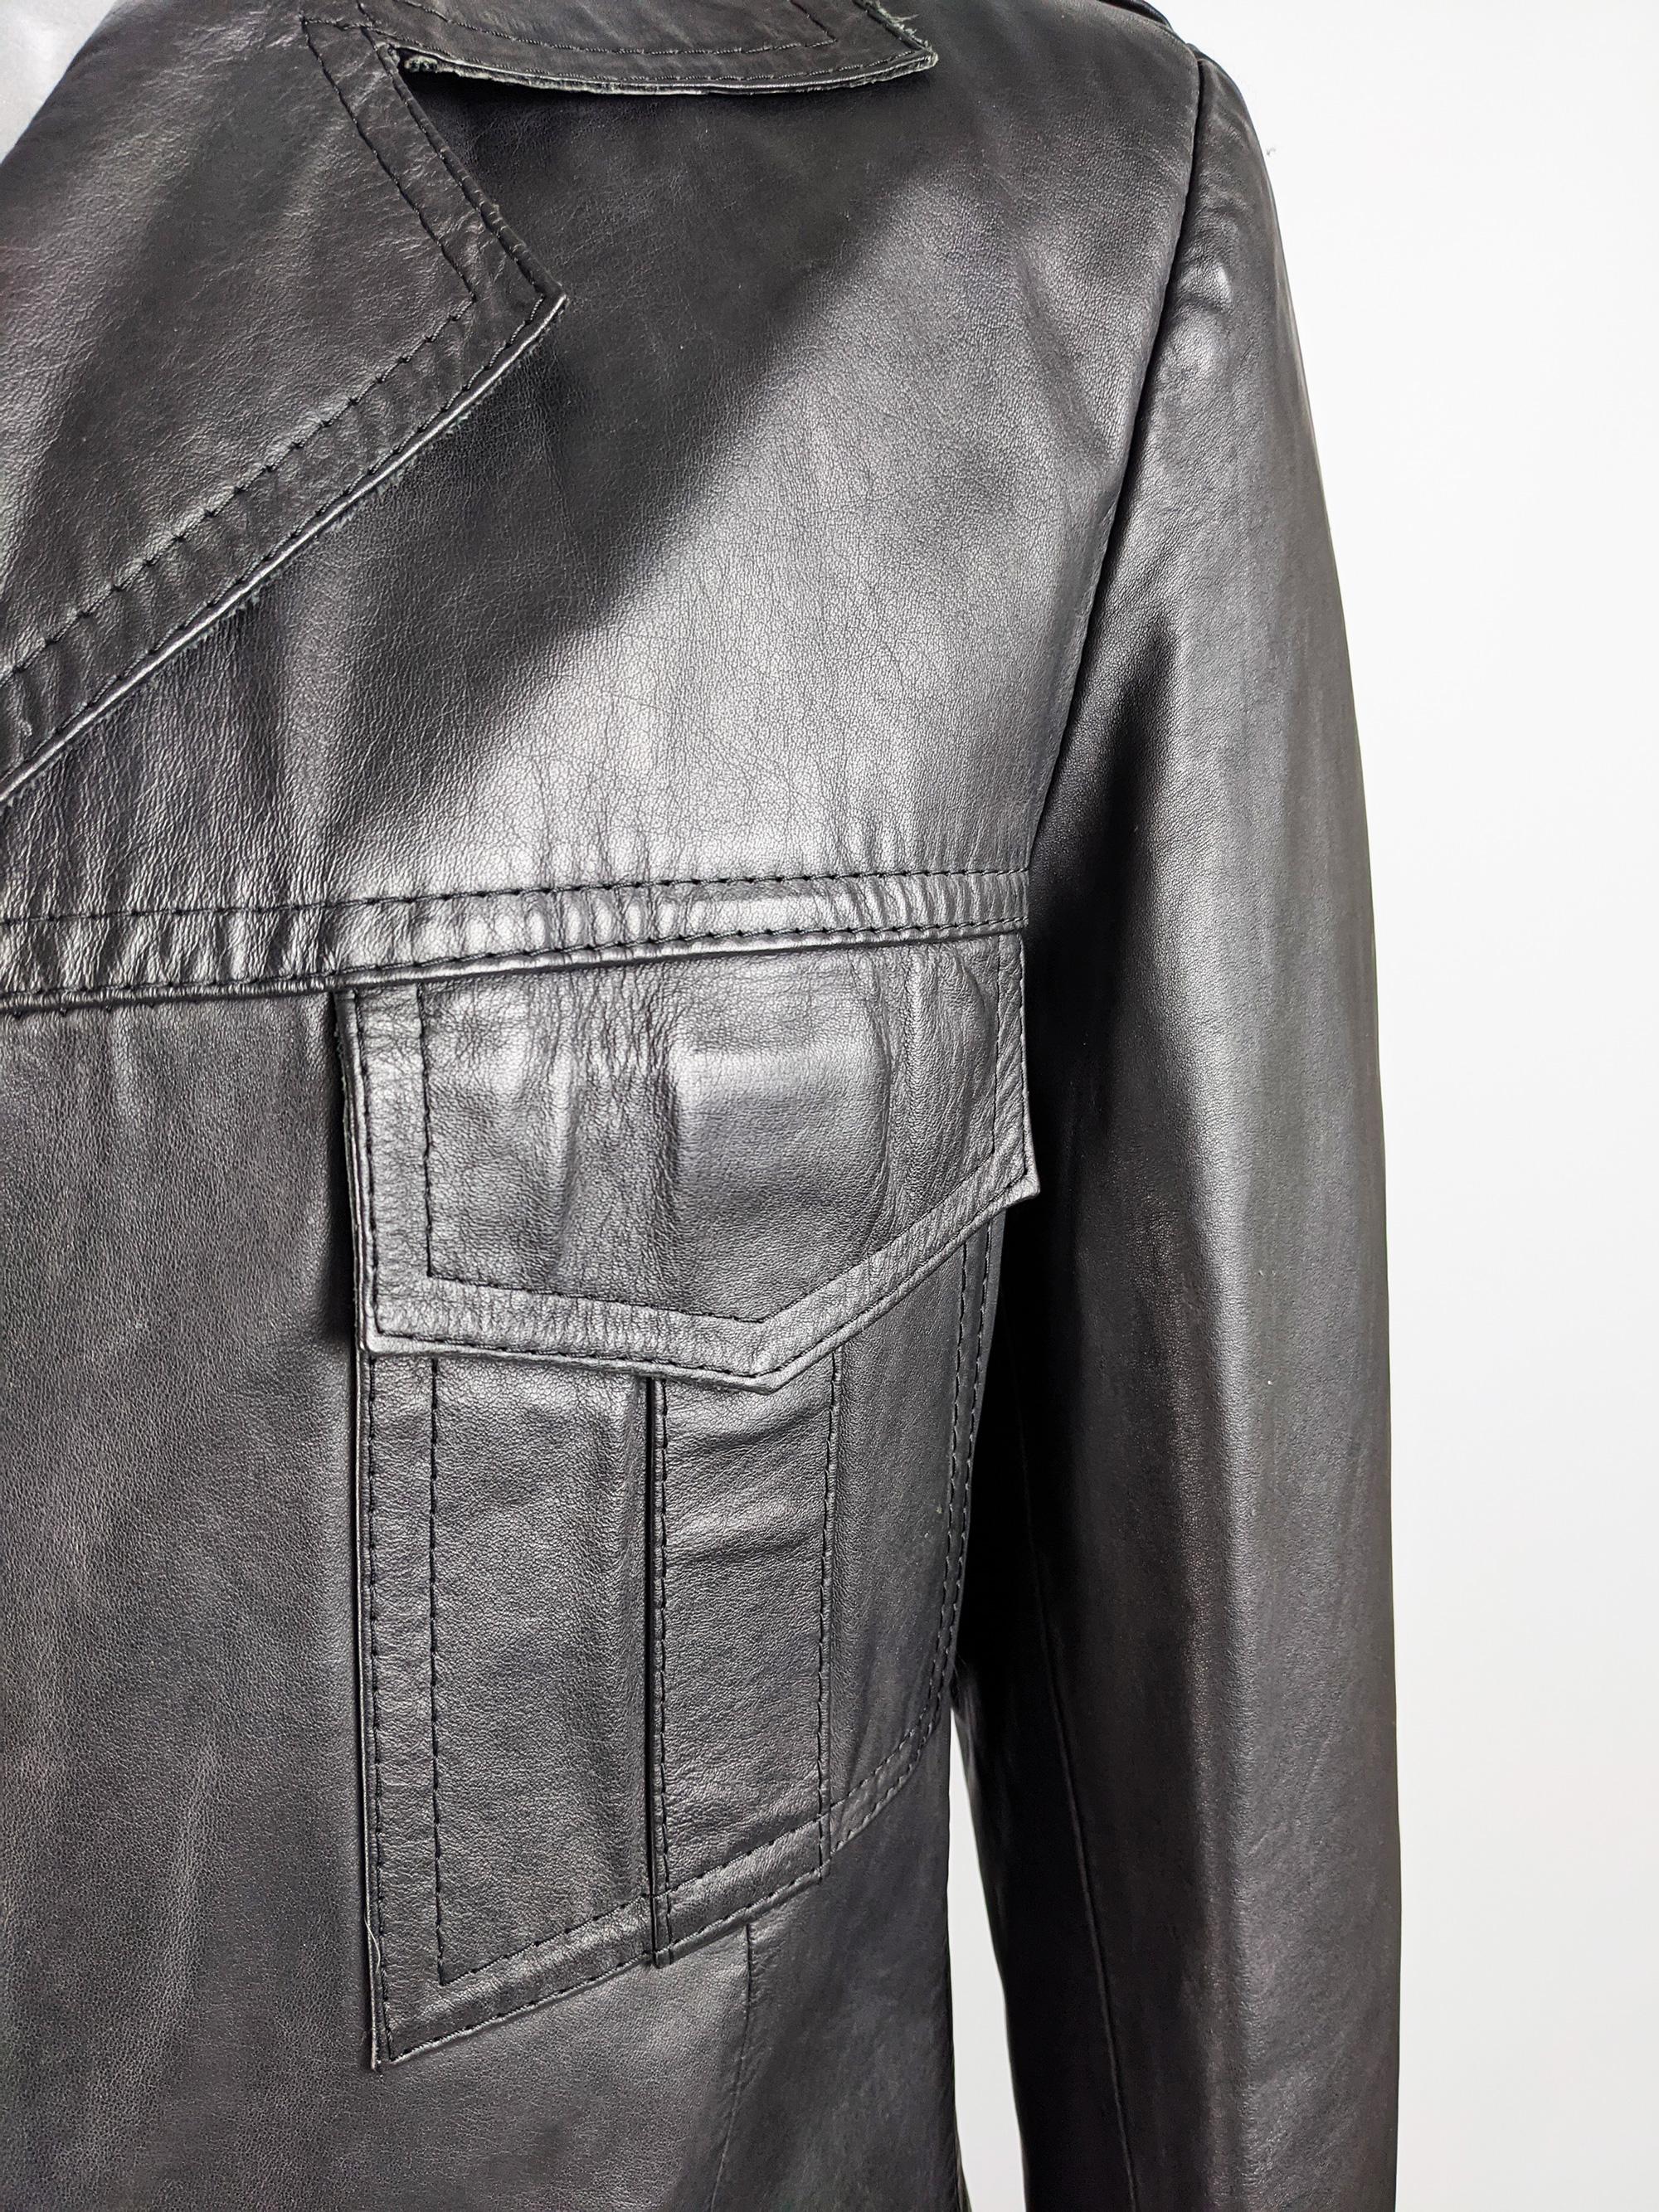 1970s Mens Vintage Black Leather Safari Fashion Jacket For Sale at ...